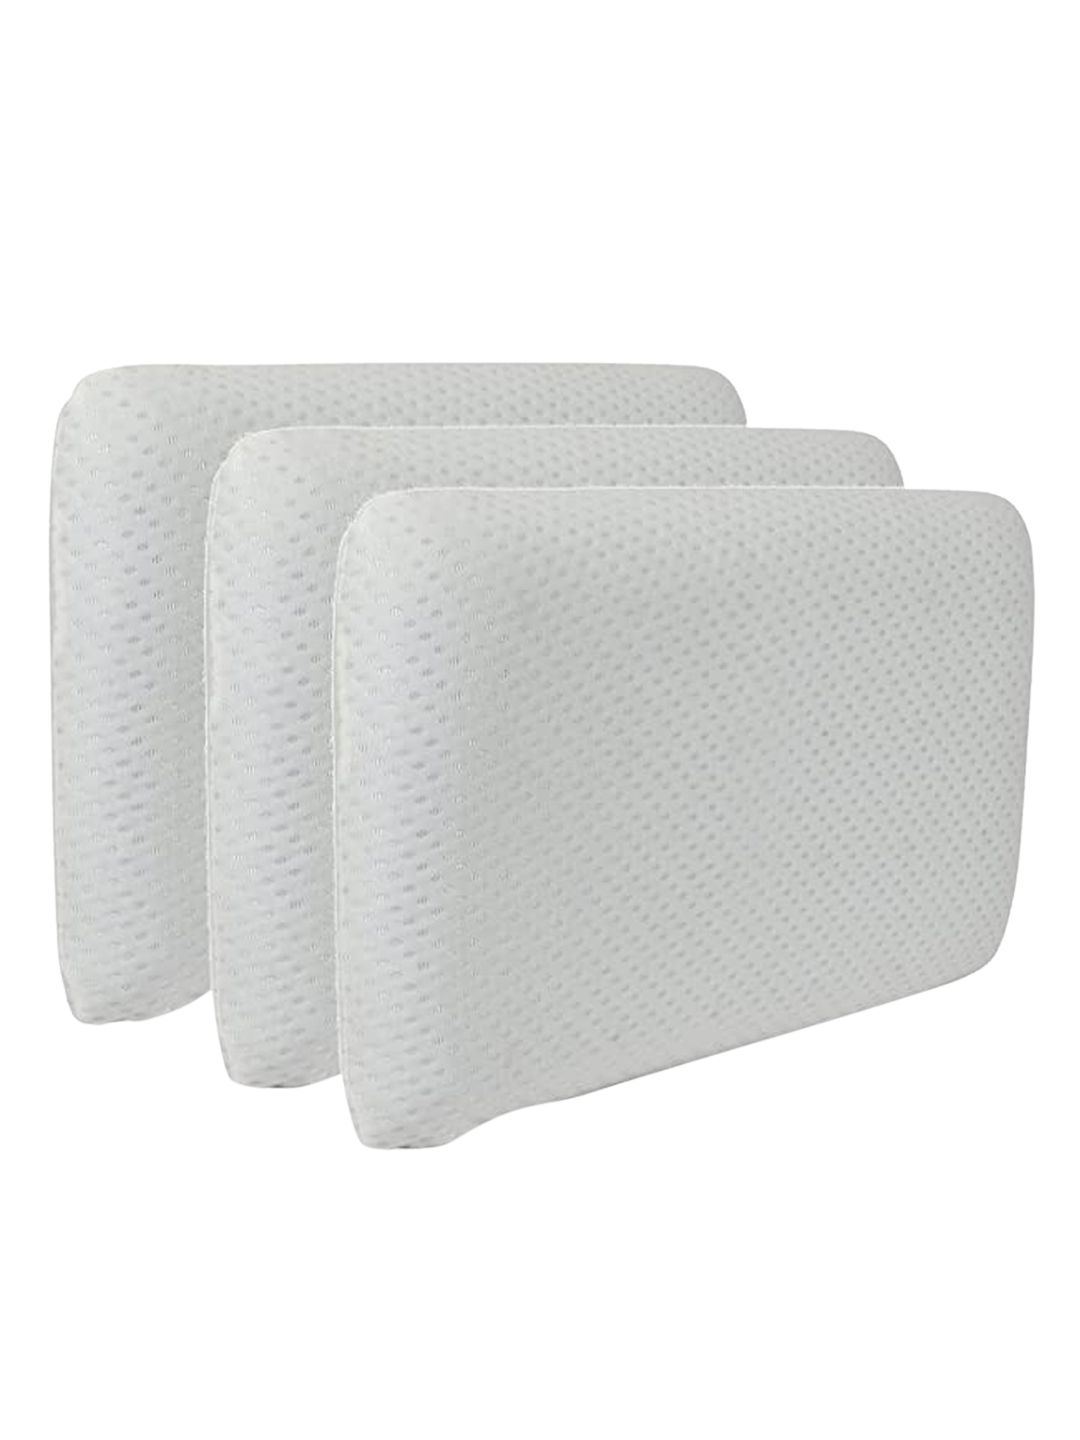 Sleepsia Set Of 3 White Solid Therapeutic Pillow Price in India